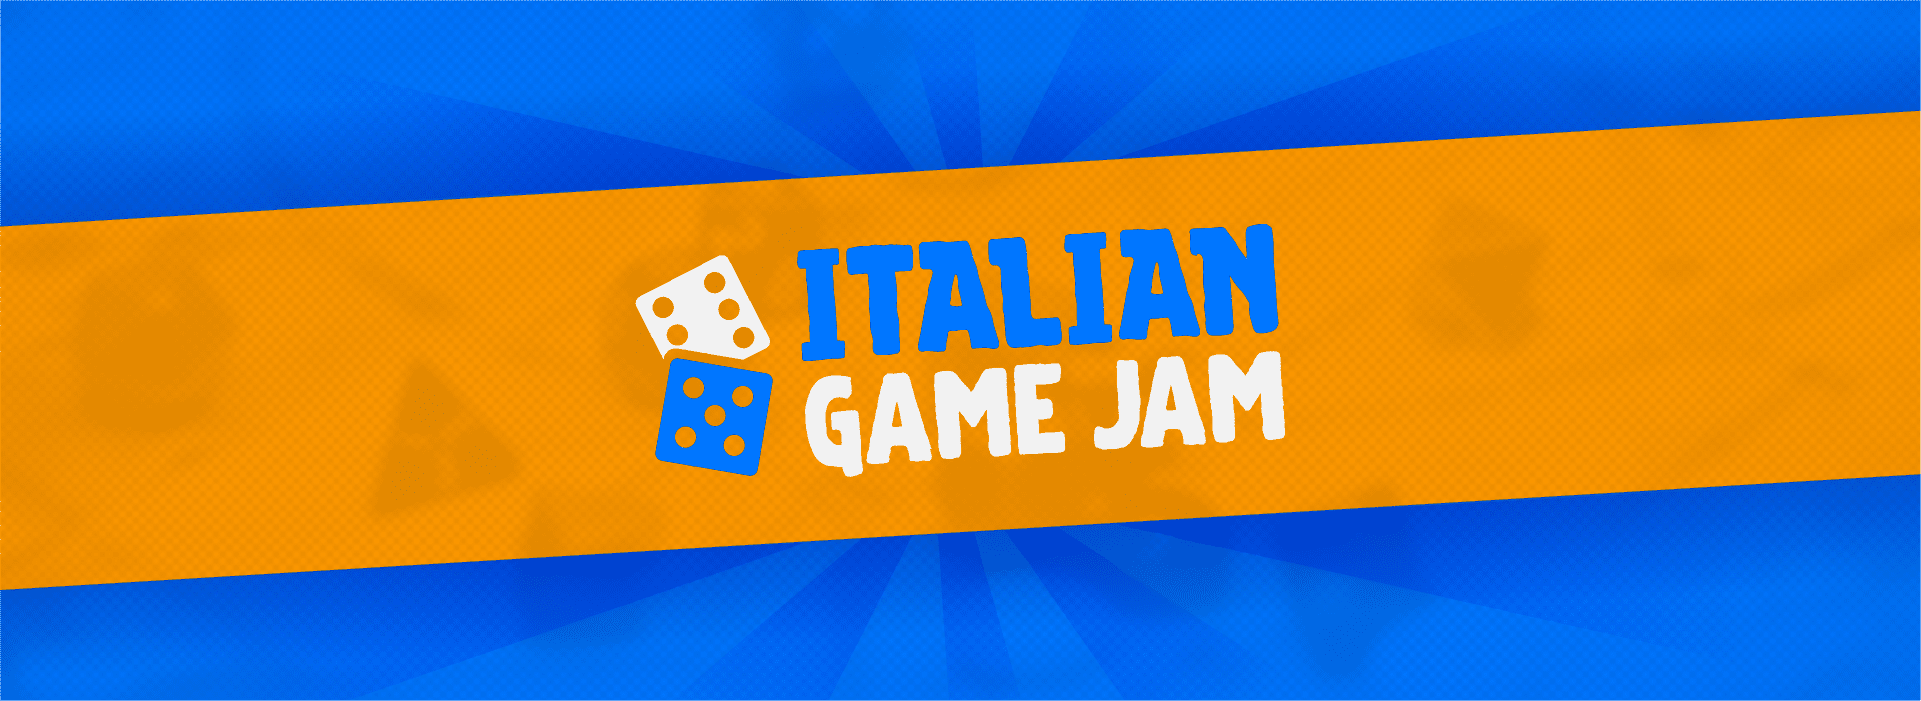 italian-game-jam